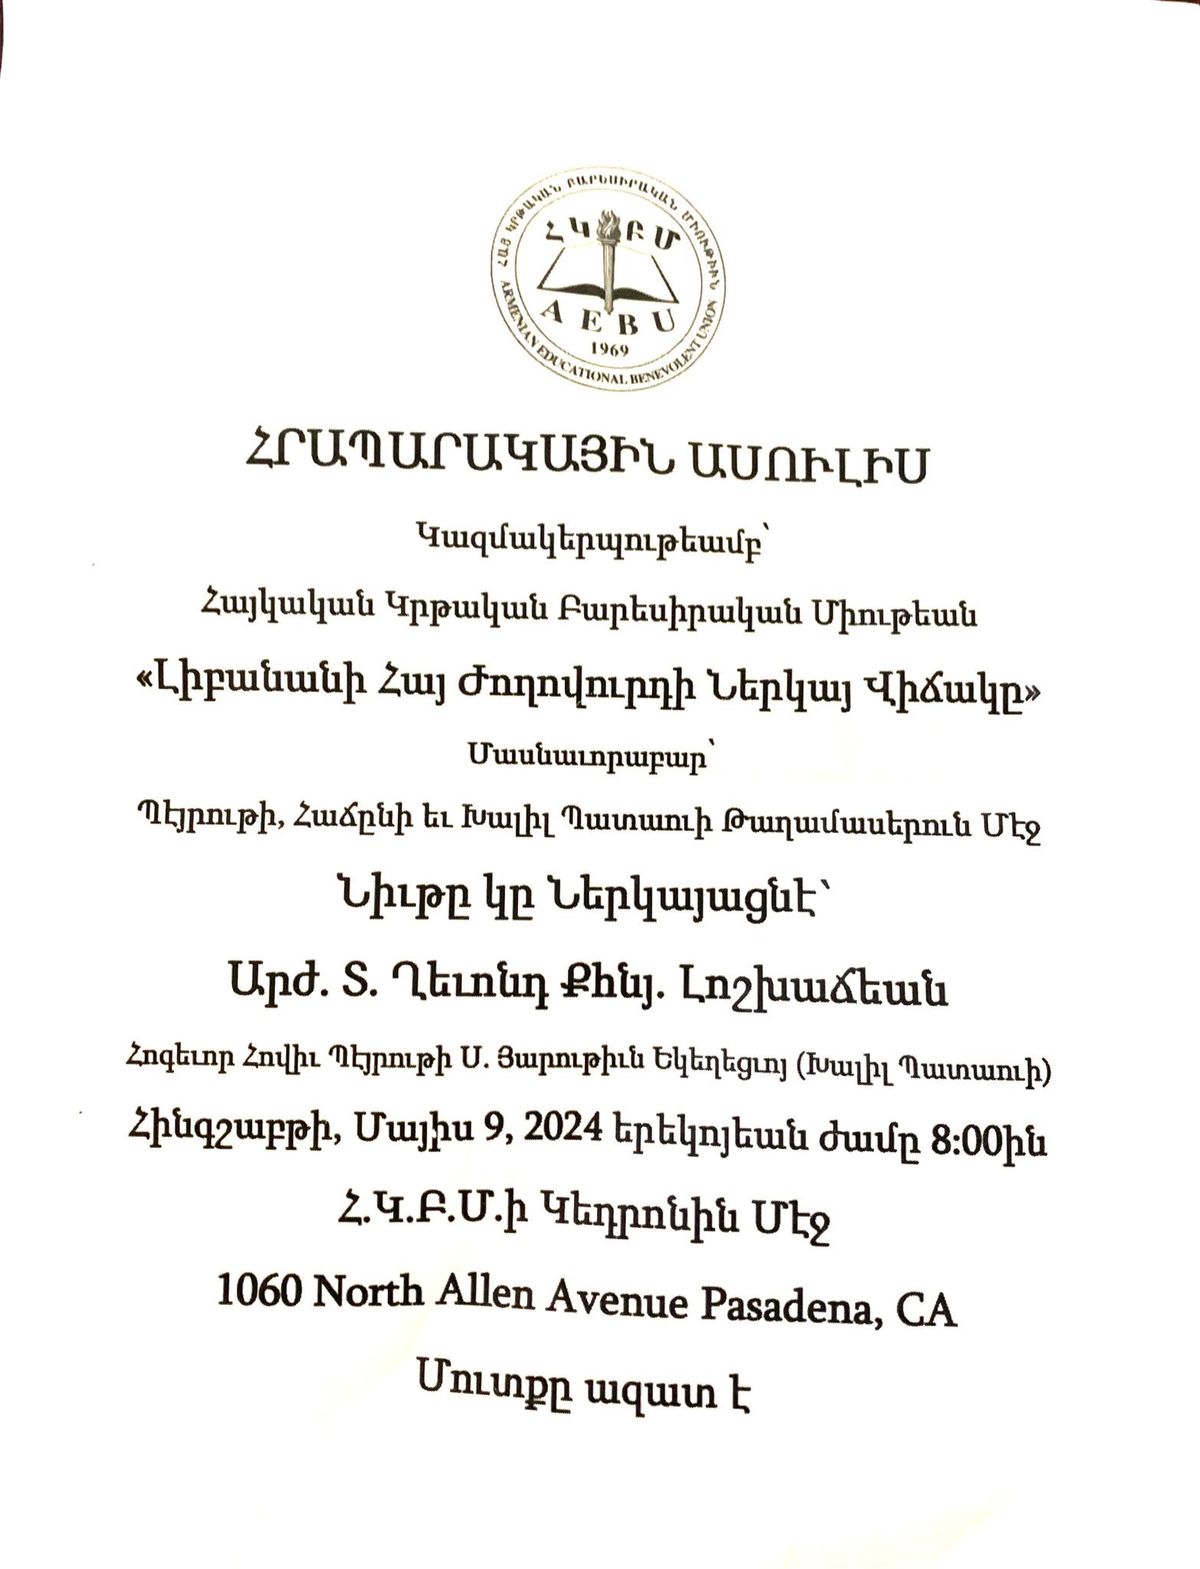 Lecture organized by Armenian Educational Benevolent Union (AEBU)